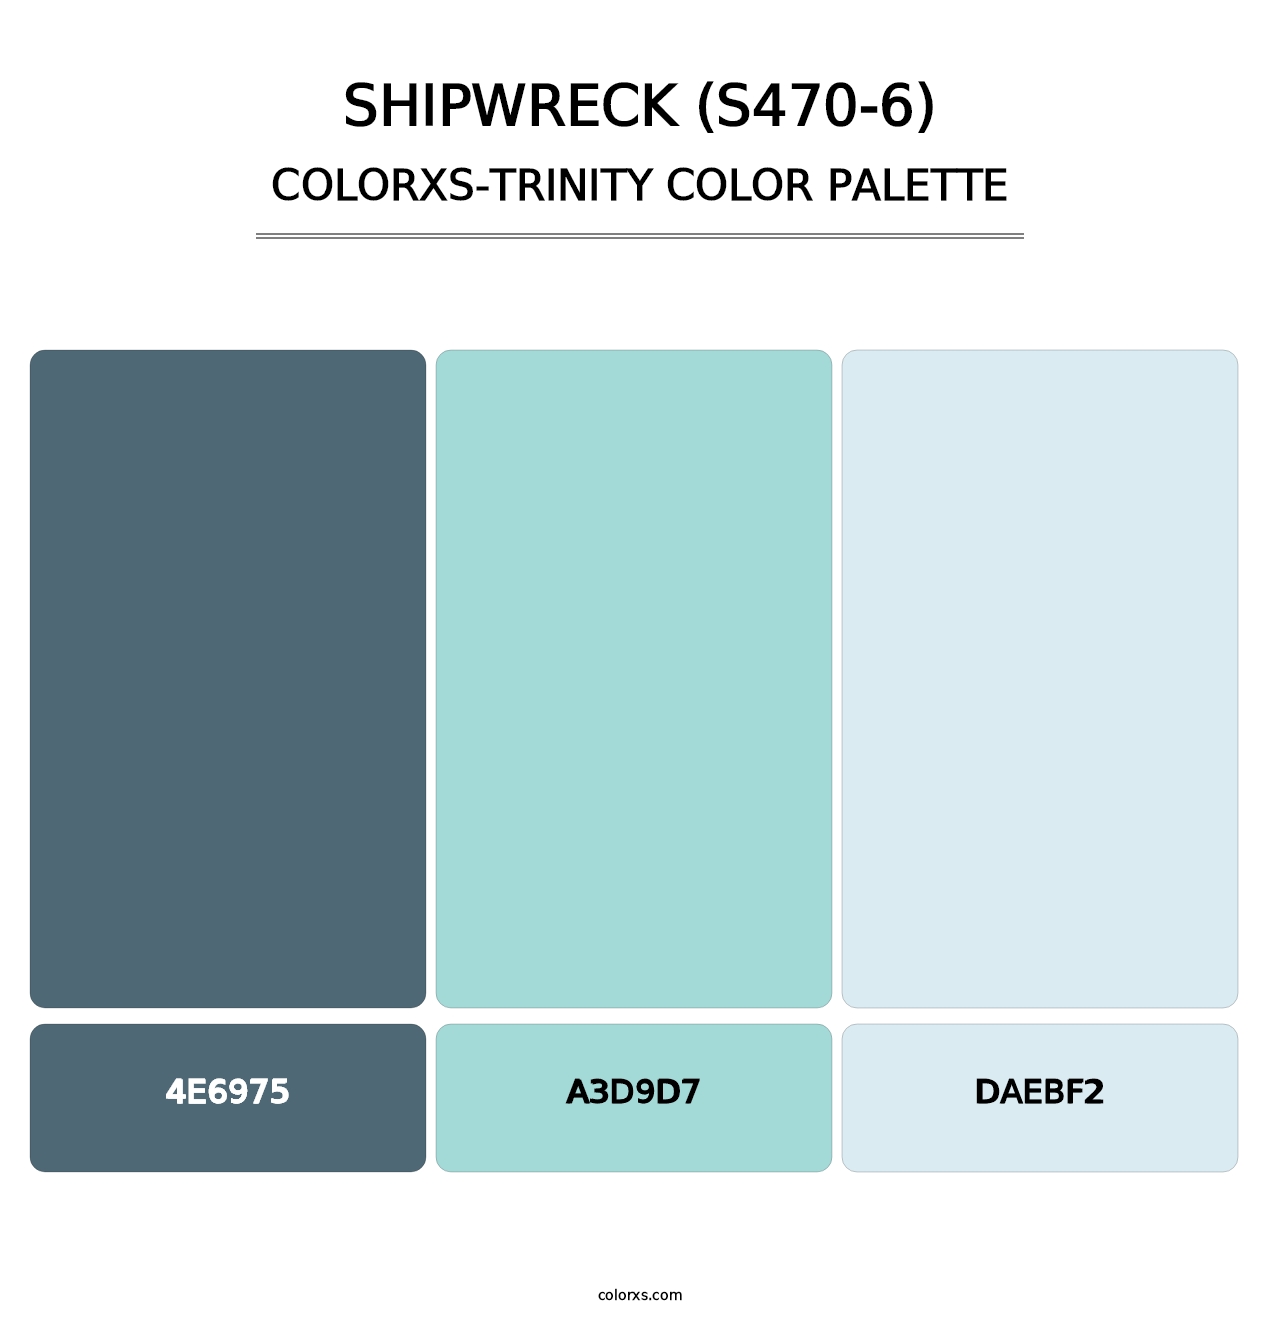 Shipwreck (S470-6) - Colorxs Trinity Palette